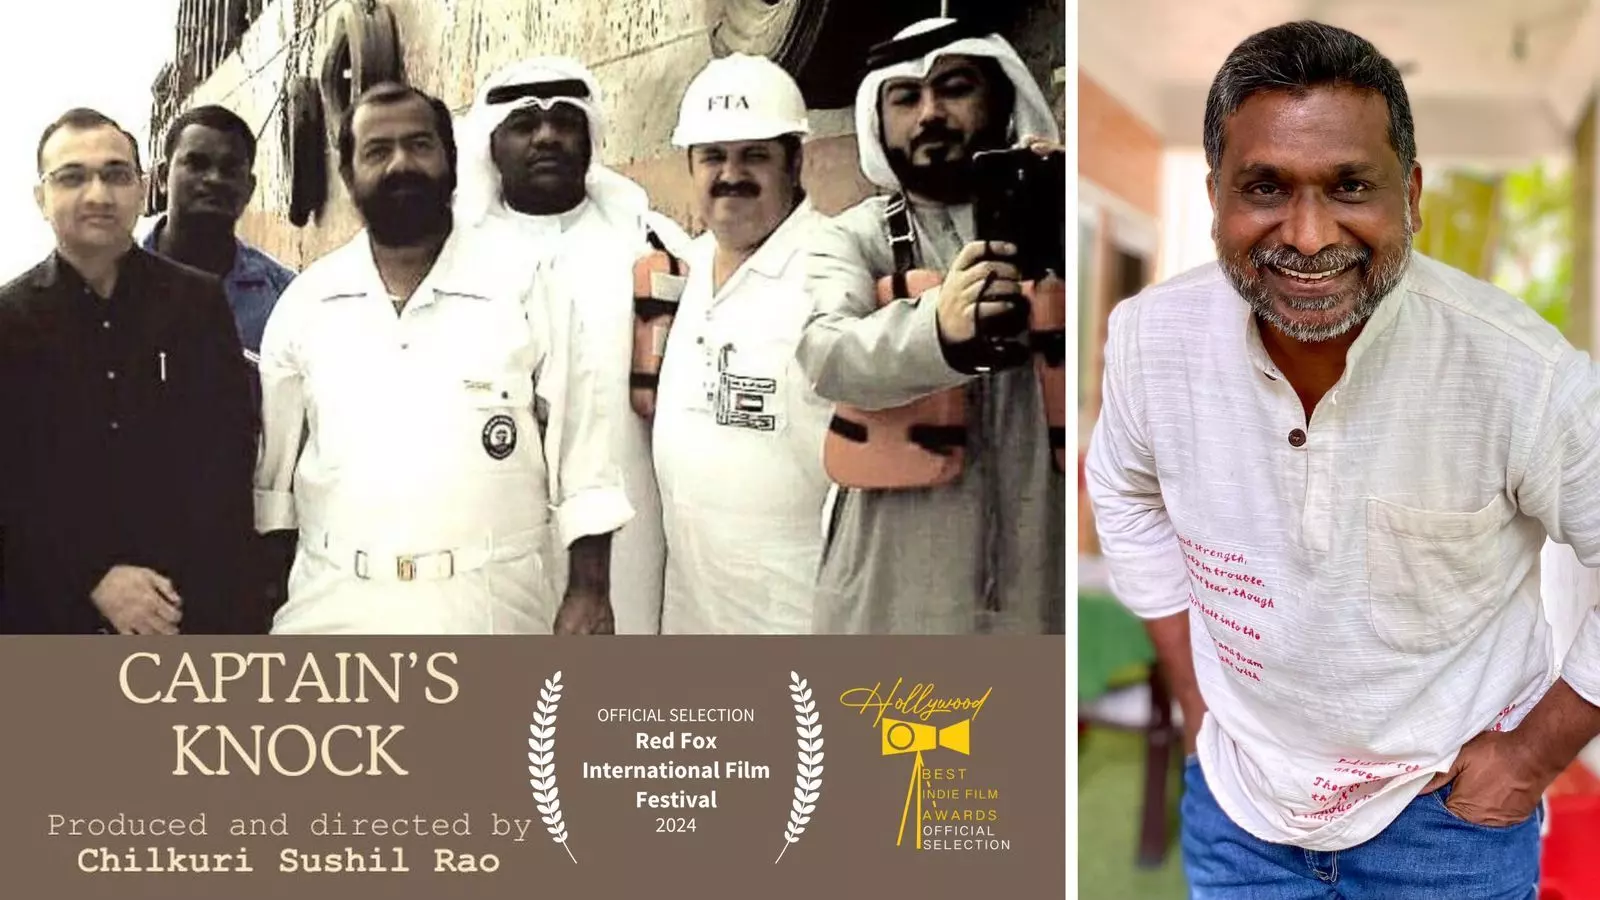 Chilkuri Sushil Rao’s Captain’s Knock documentary selected for two international film festivals